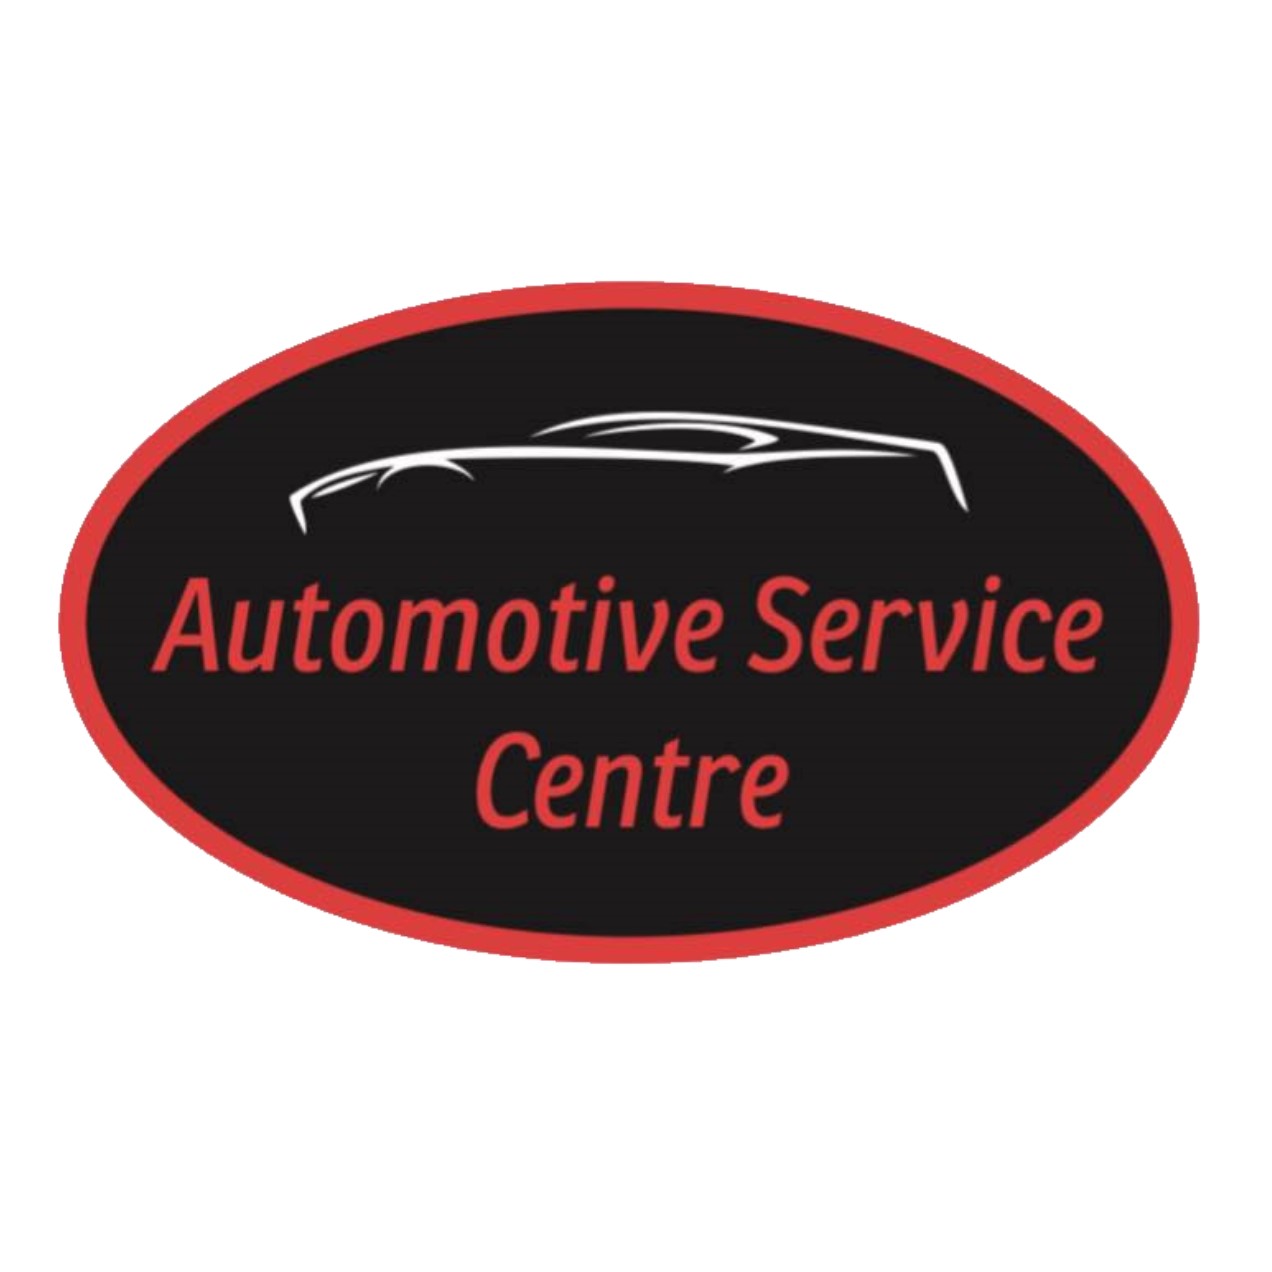 Automotive service centre